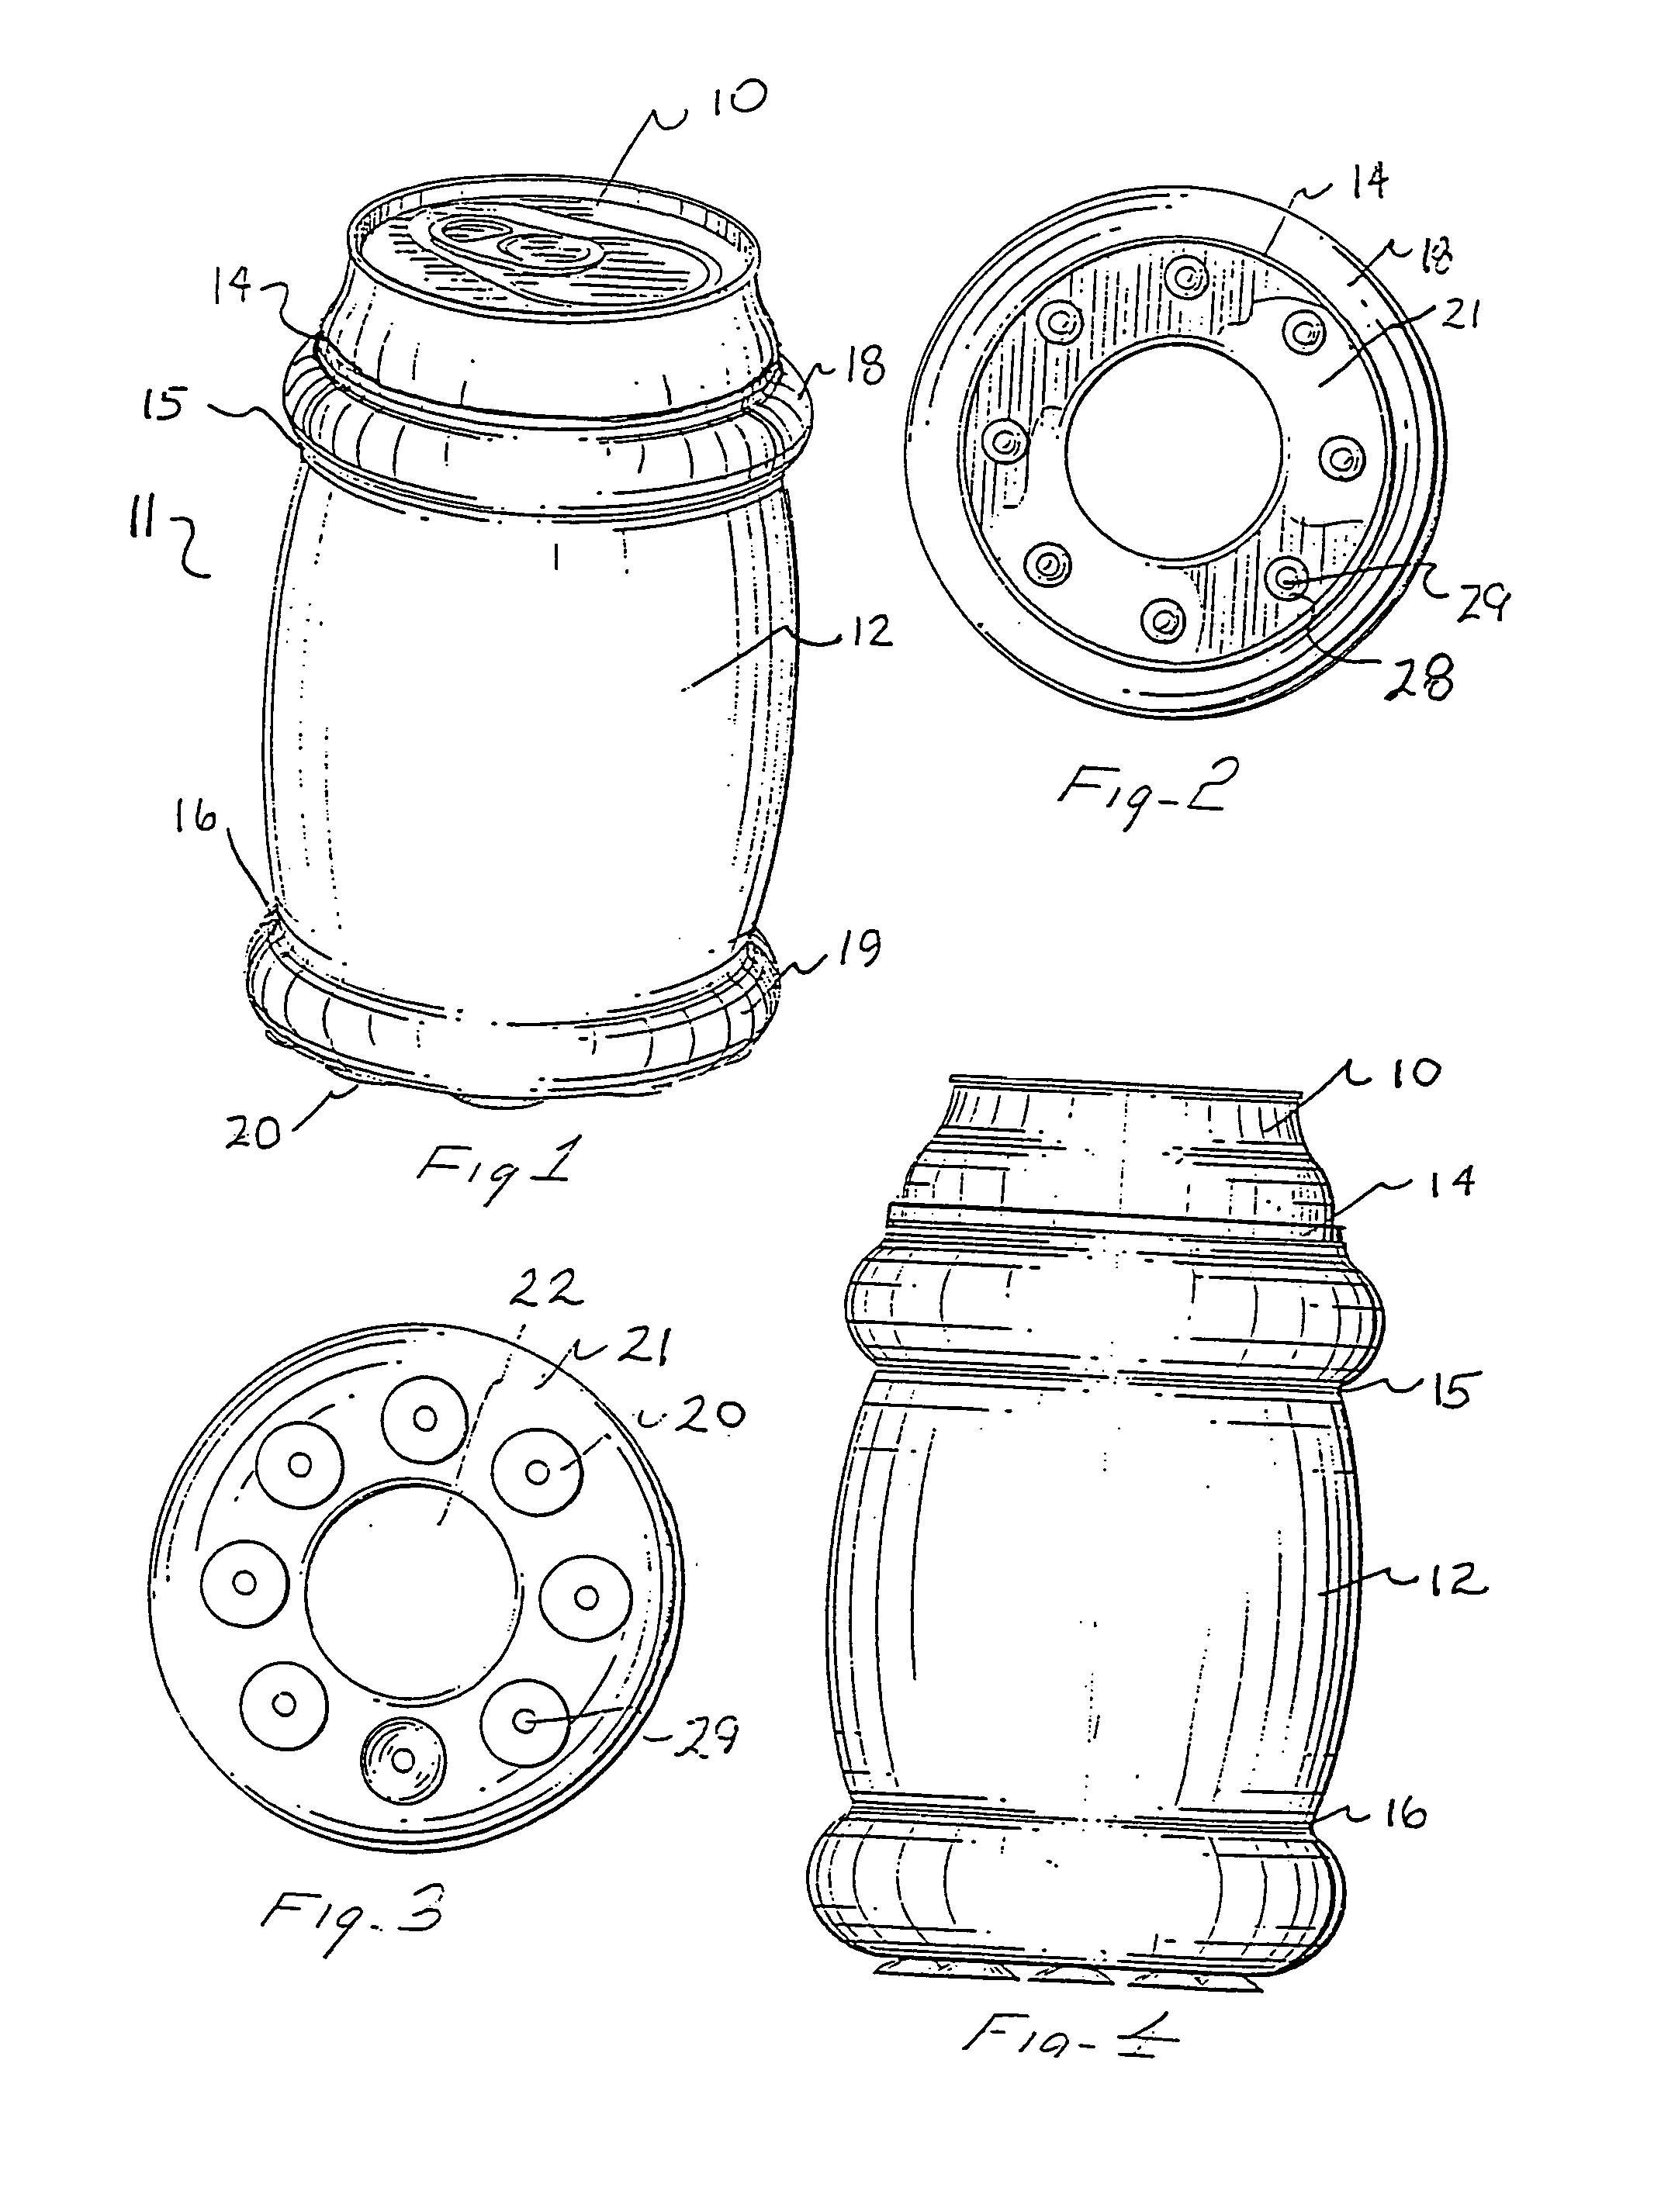 Insulating beverage container holder